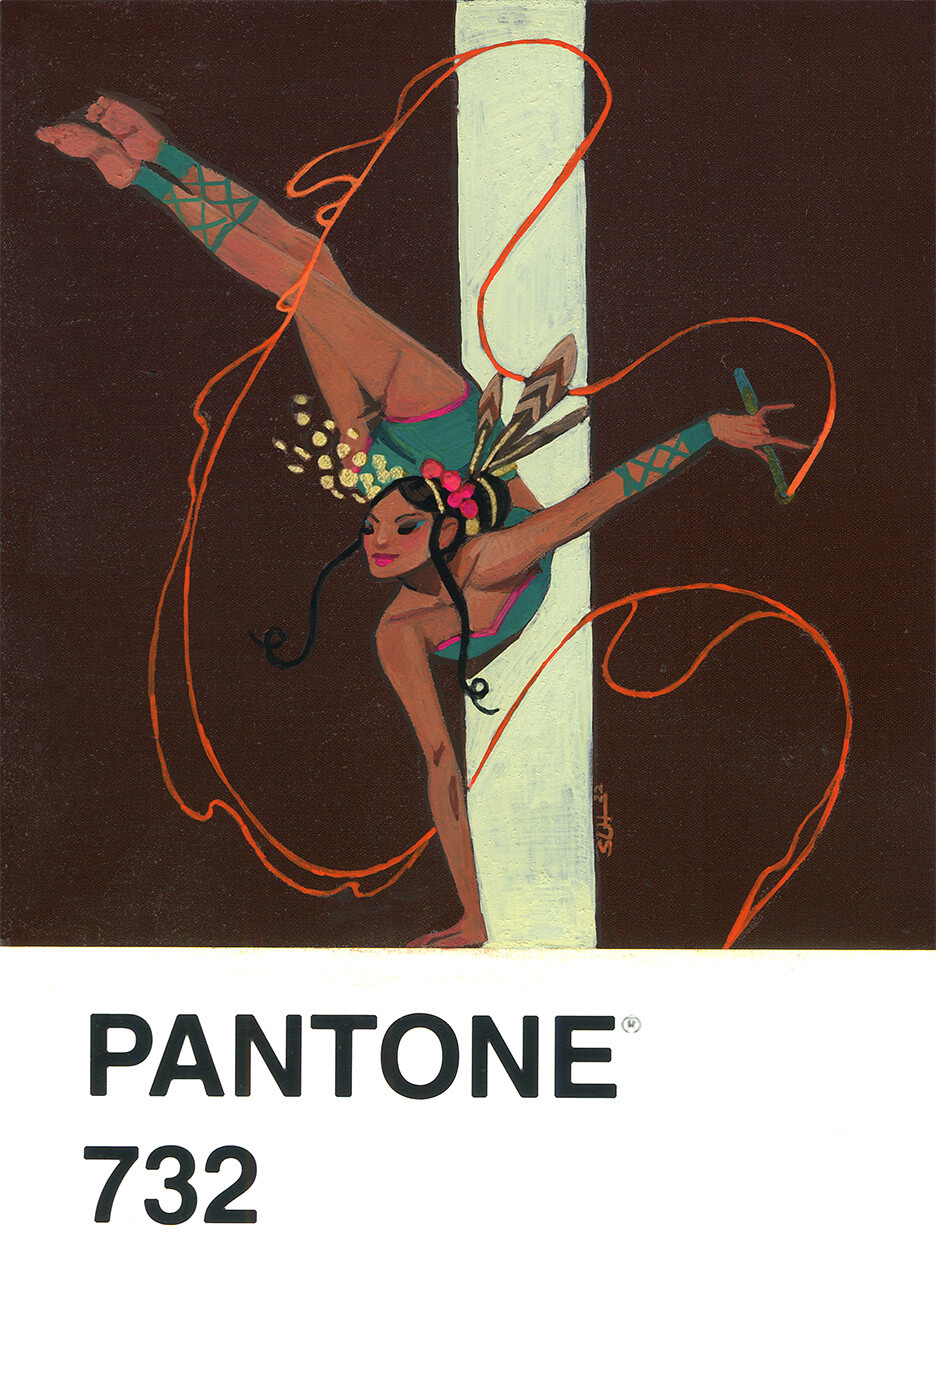 Painting on PANTONE POSTCARDS - pt. 4 